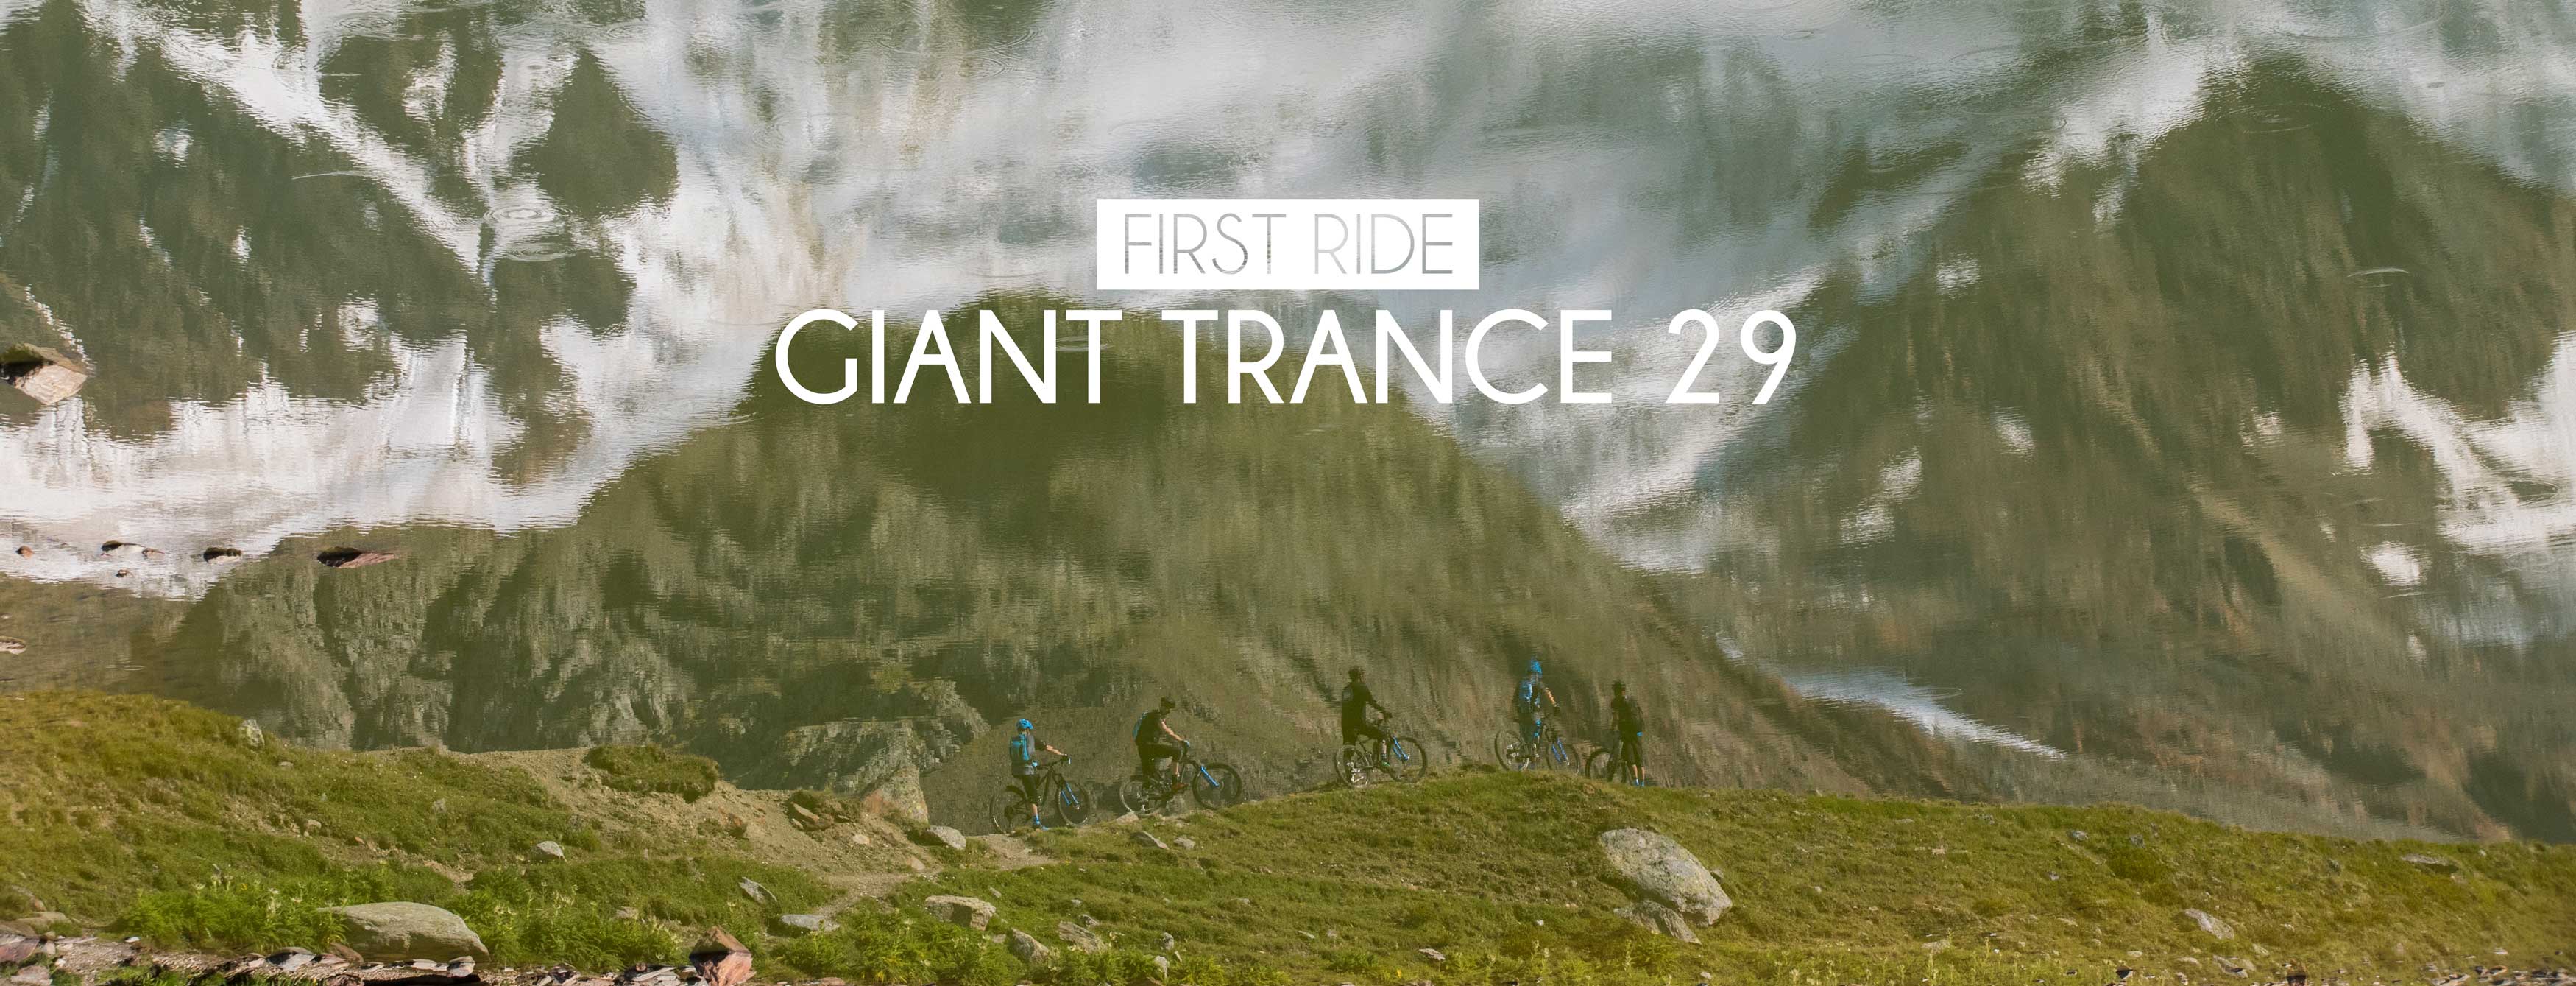 Giant Trance 29